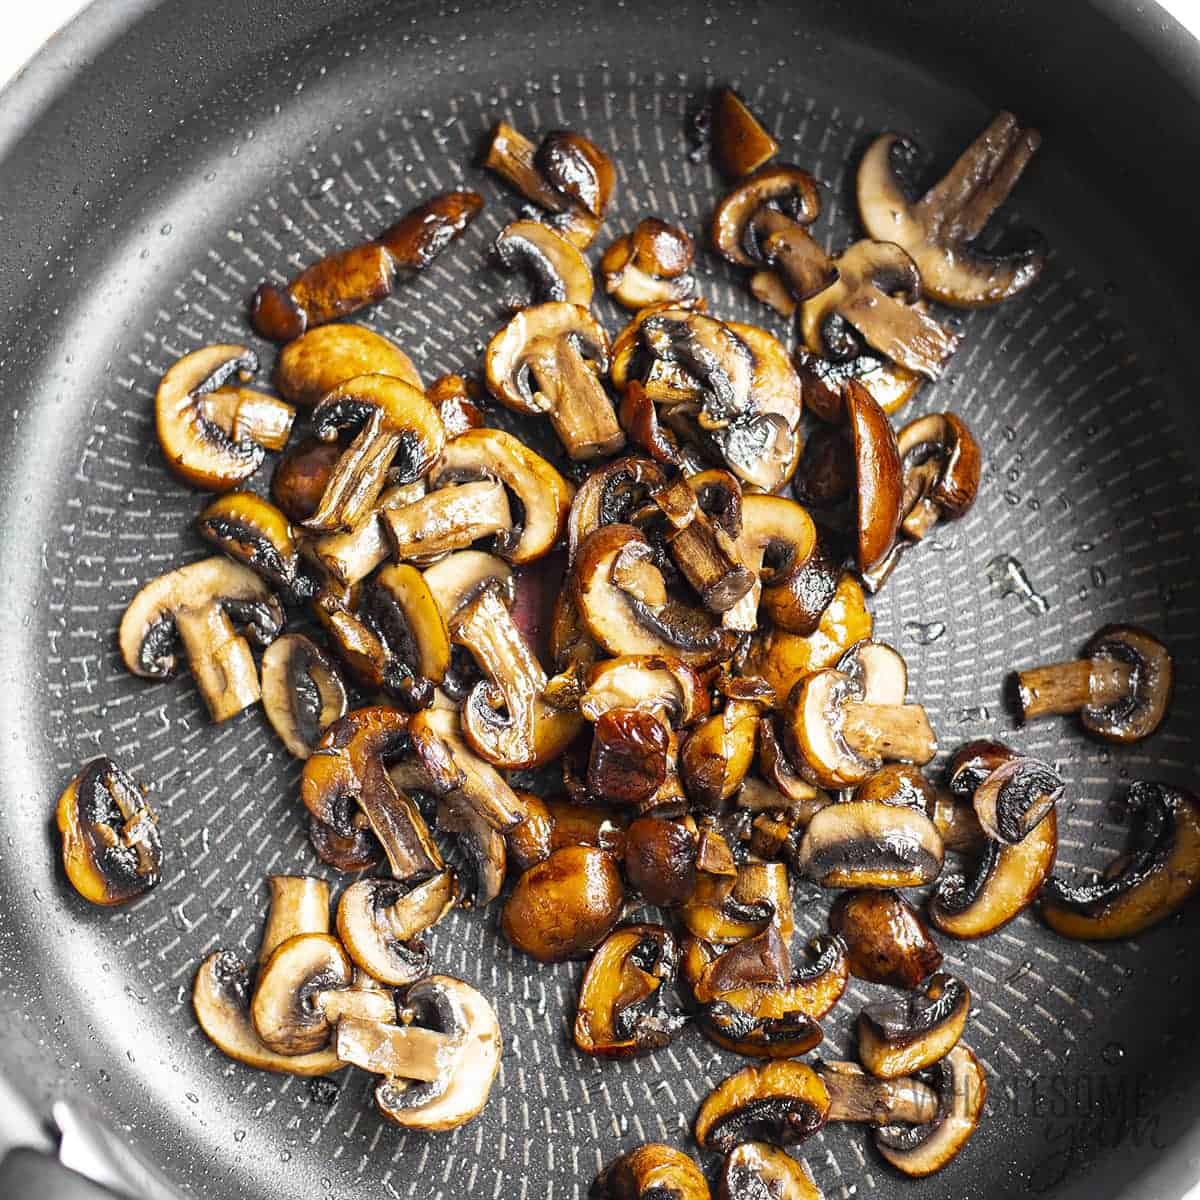 Sauteed mushrooms in skillet